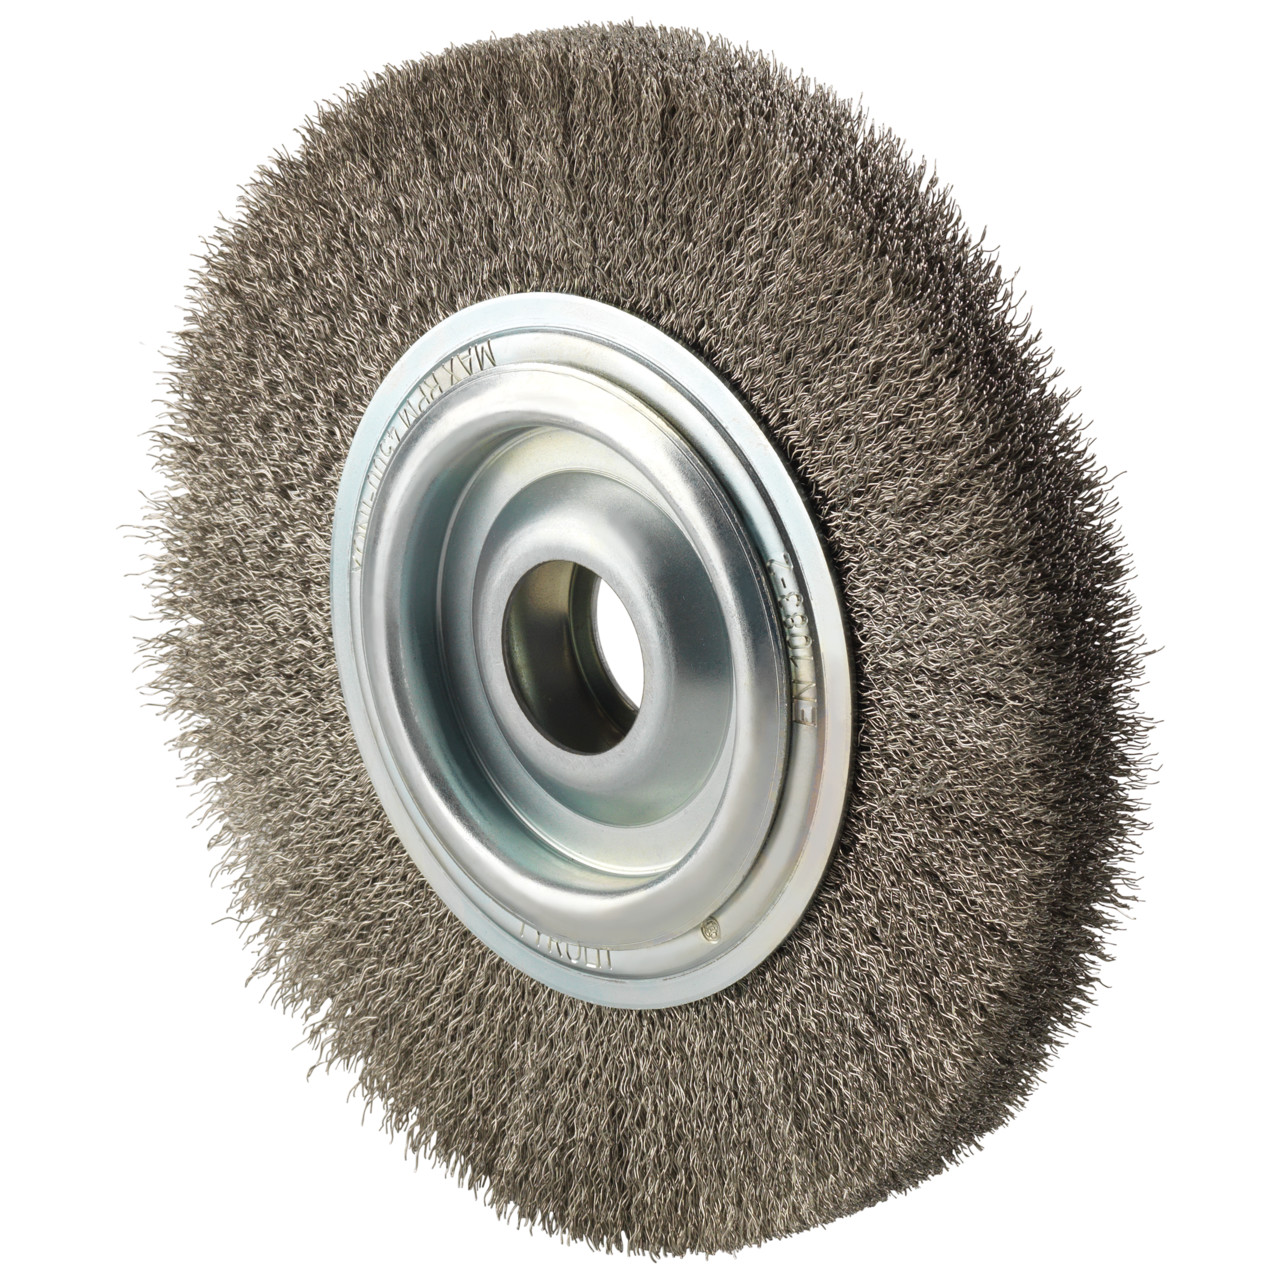 Spazzole rotonde Tyrolit DxLxH 200x26x40x32 Per acciaio inox, forma: 1RDW - (spazzole rotonde), Art. 896119